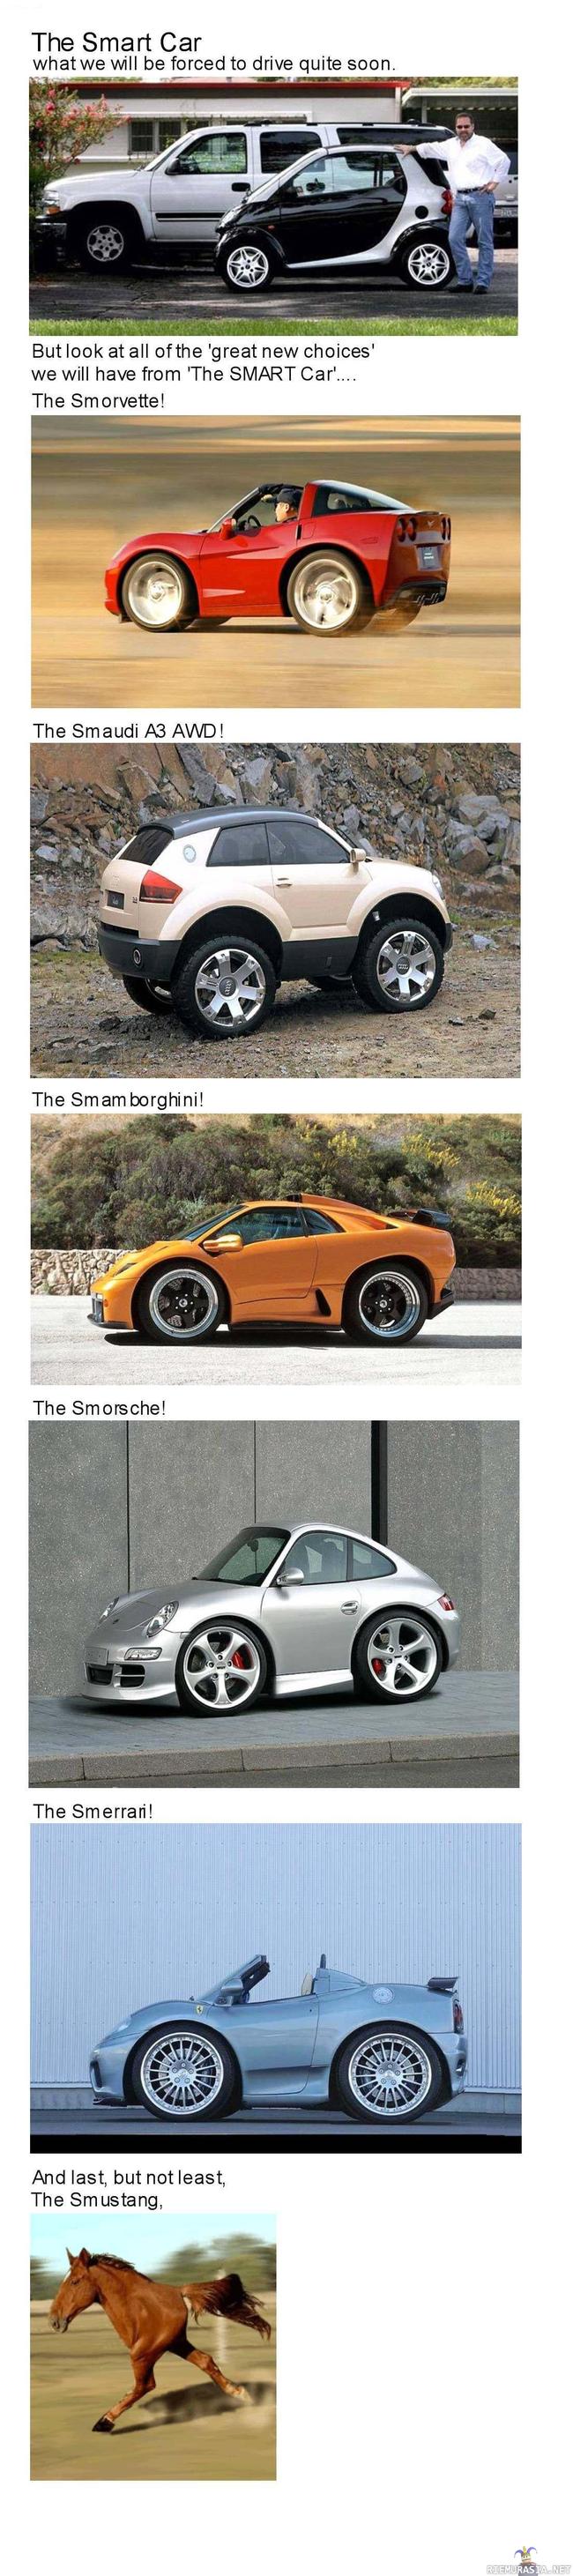 Smart cars